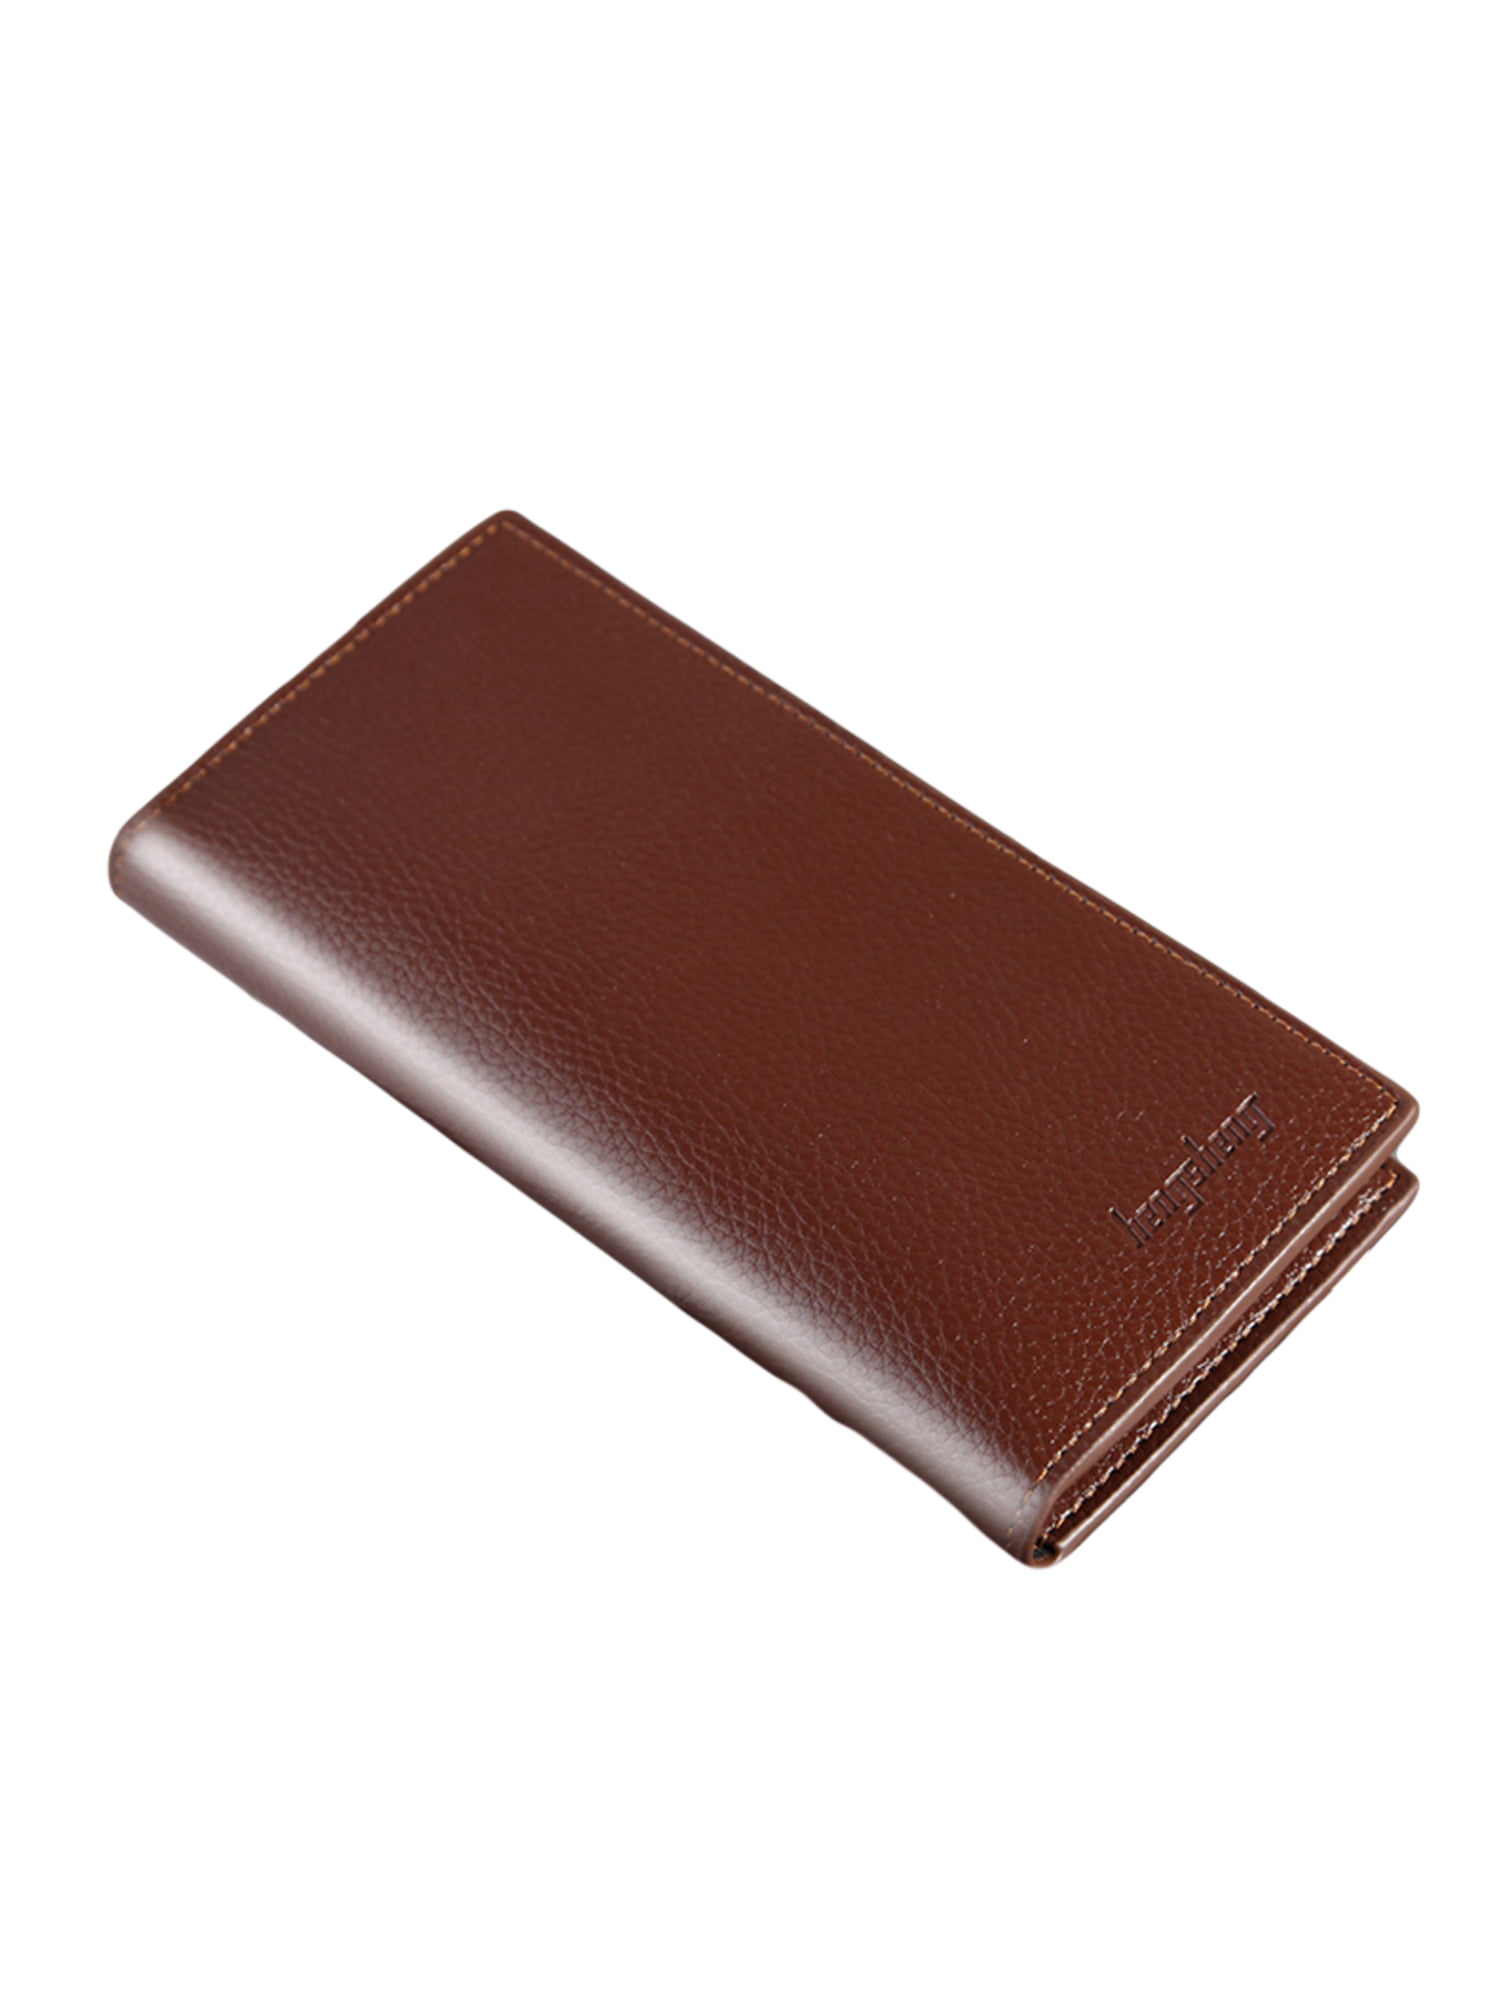 New Mens Leather Wallet Pocket Bifold Purse Clutch ID Credit Card Billfold 